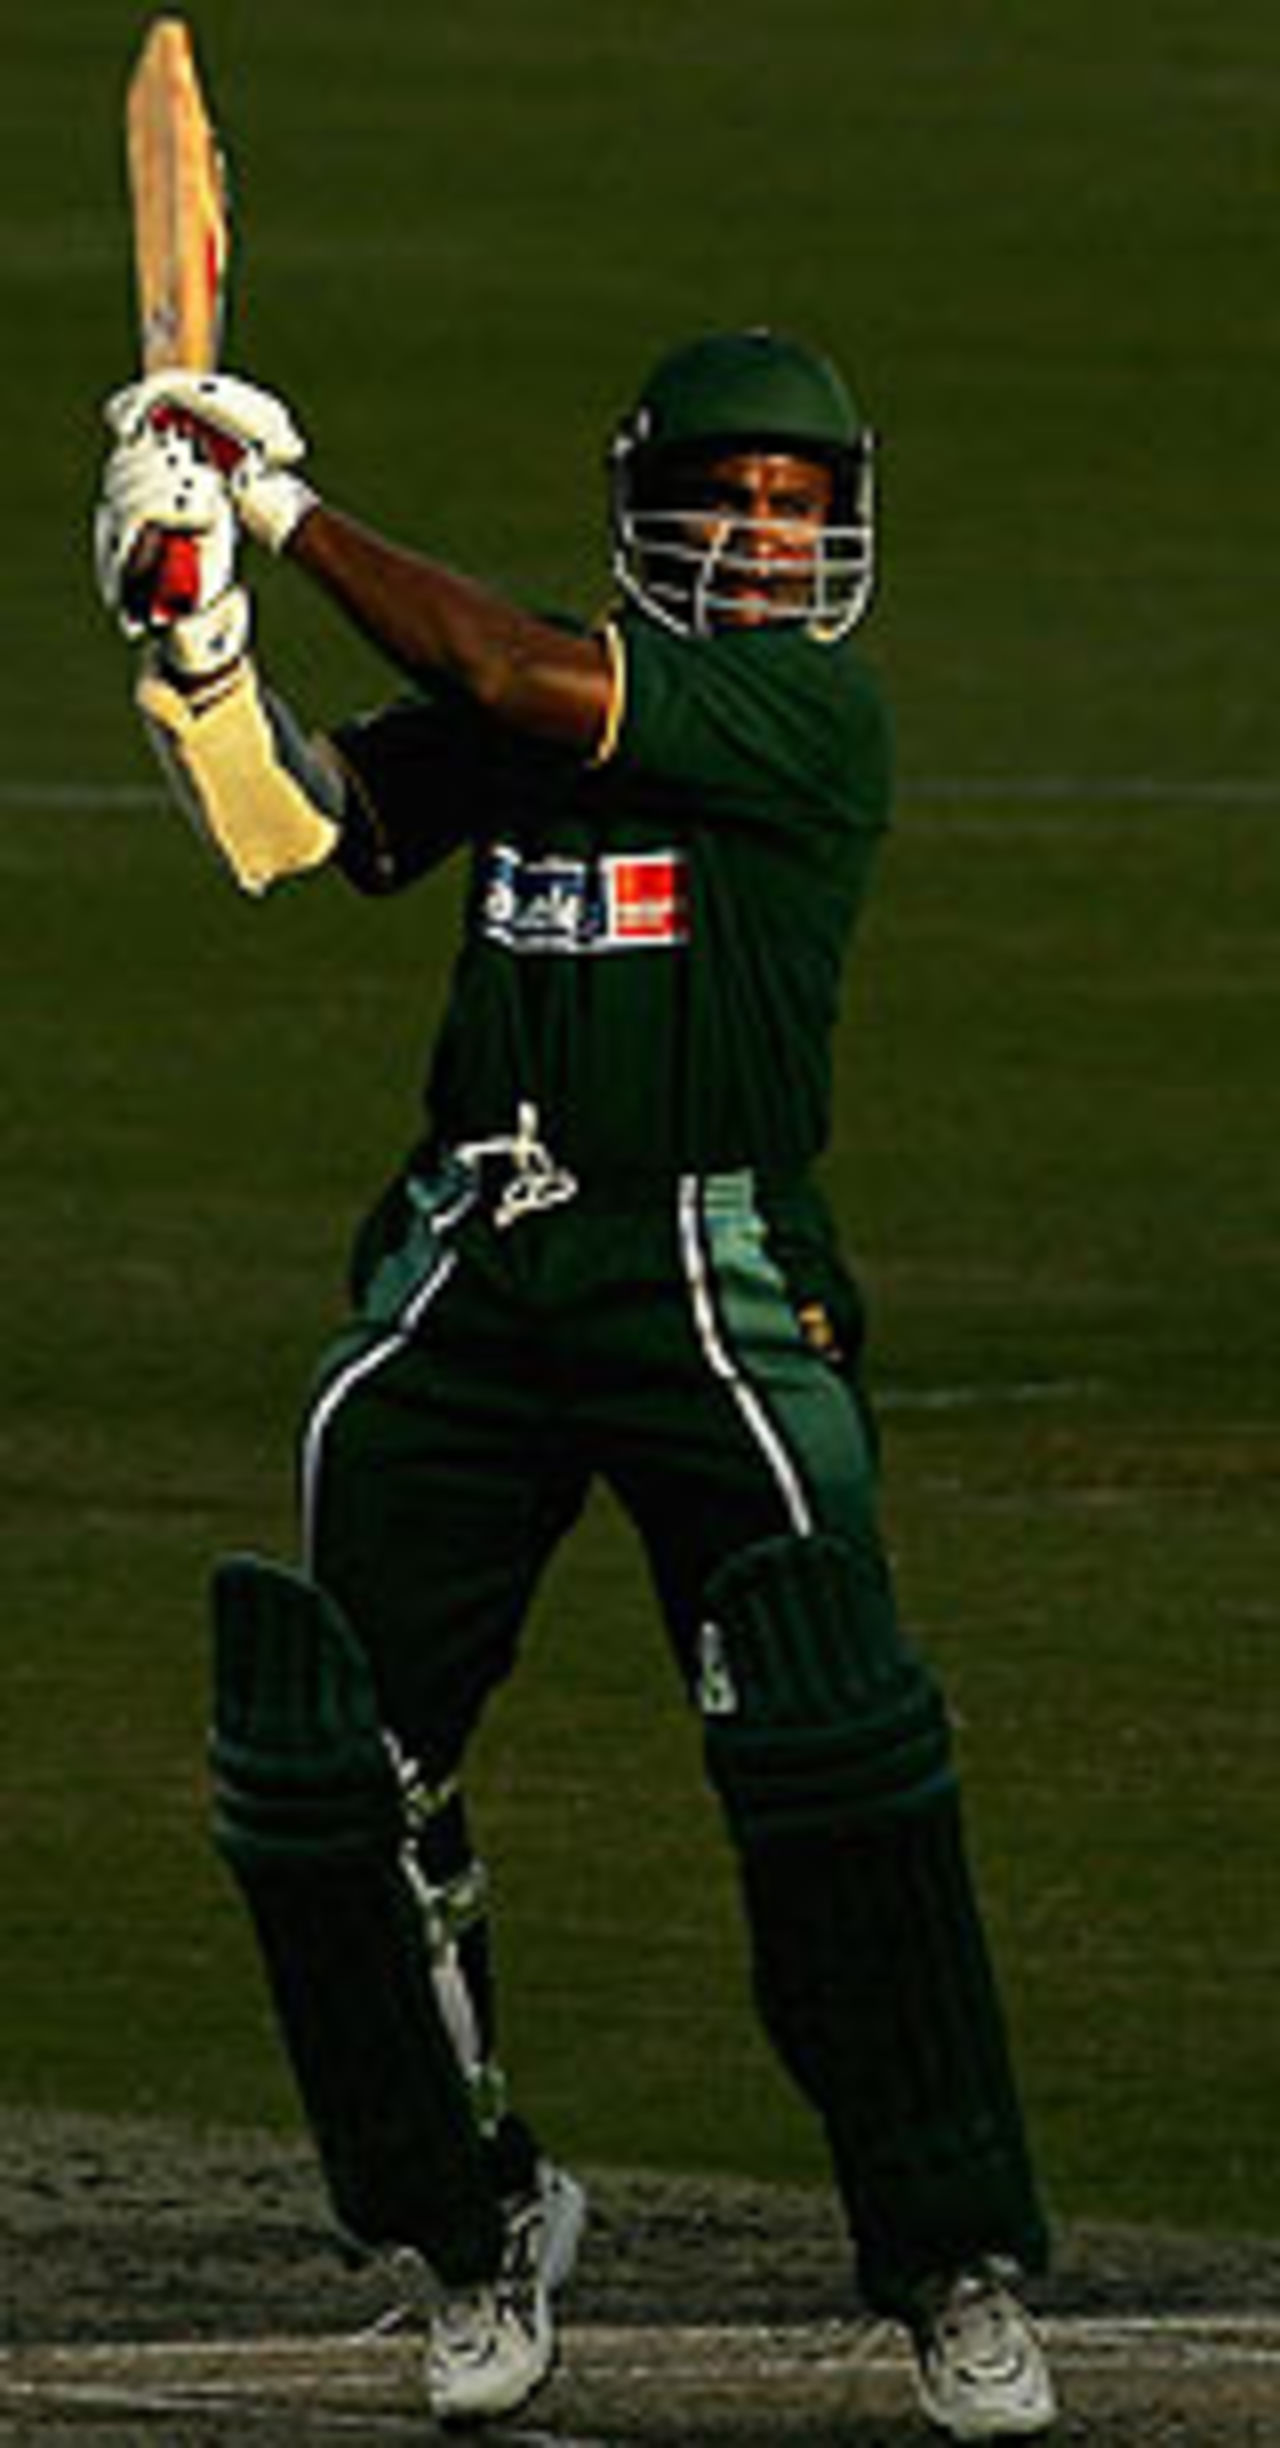 Sanath Jayasuriya cuts one, ICC XI v Asian XI, Melbourne, January 10, 2005